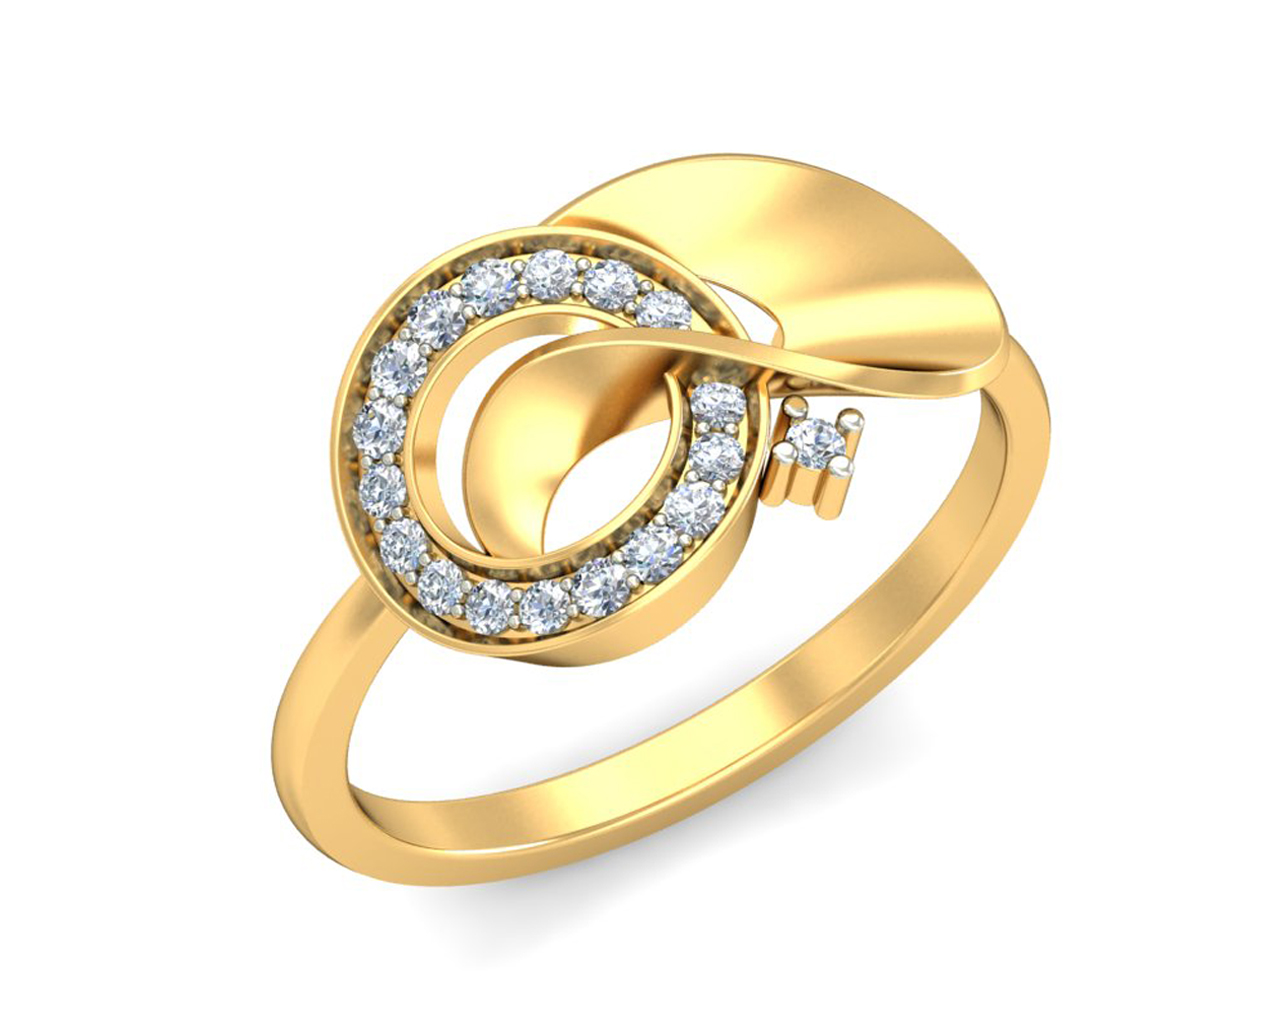 Ik Onkar Ring in Mumbai at best price by Zivoli Jewels - Justdial